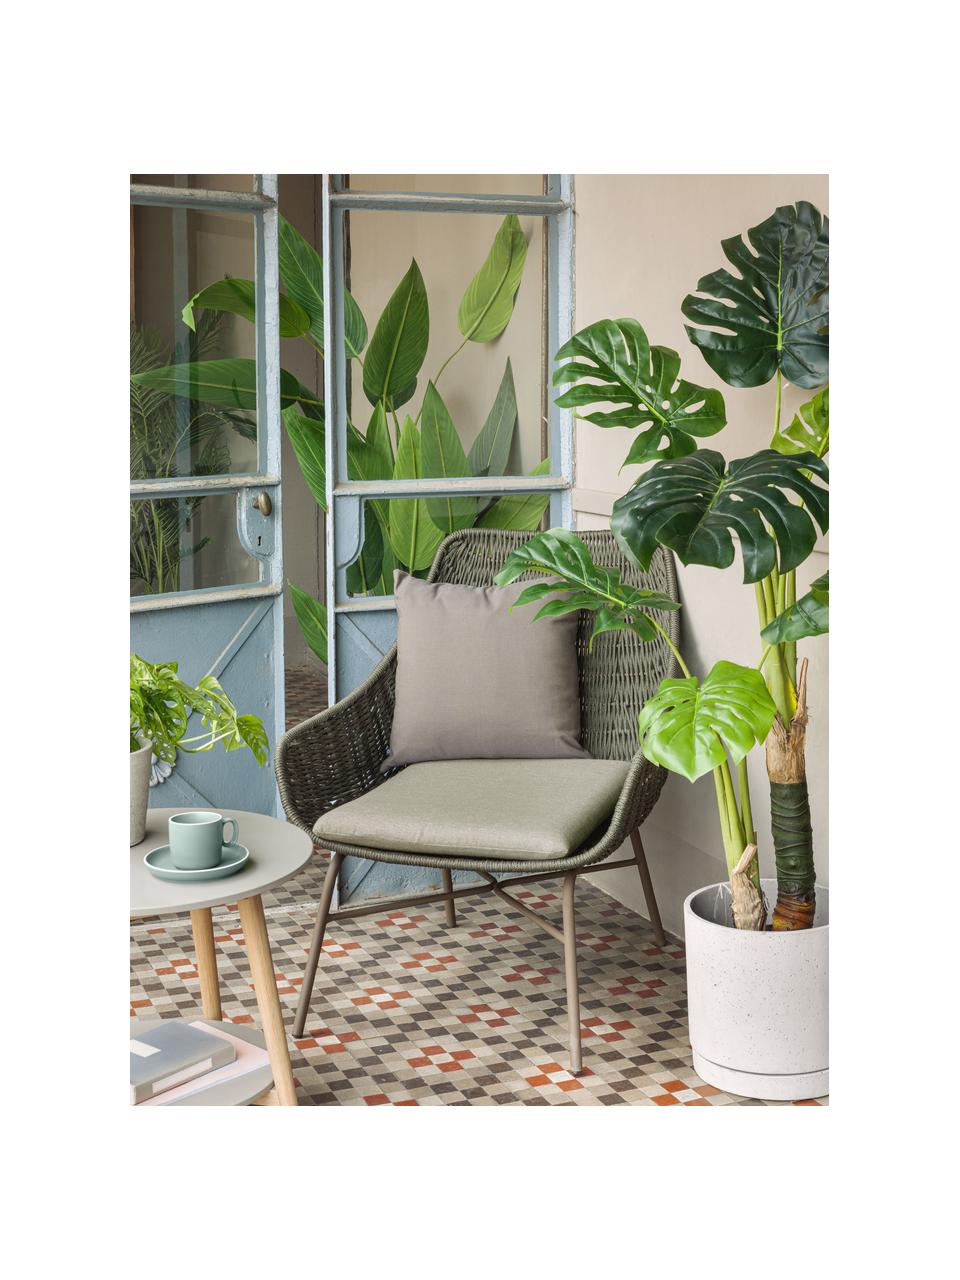 Garten-Loungesessel Abeli, Sitzschale: Seil, gefärbt, Gestell: Metall, verzinkt und lack, Bezug: Stoff, Dunkelgrün, B 68 x T 67 cm